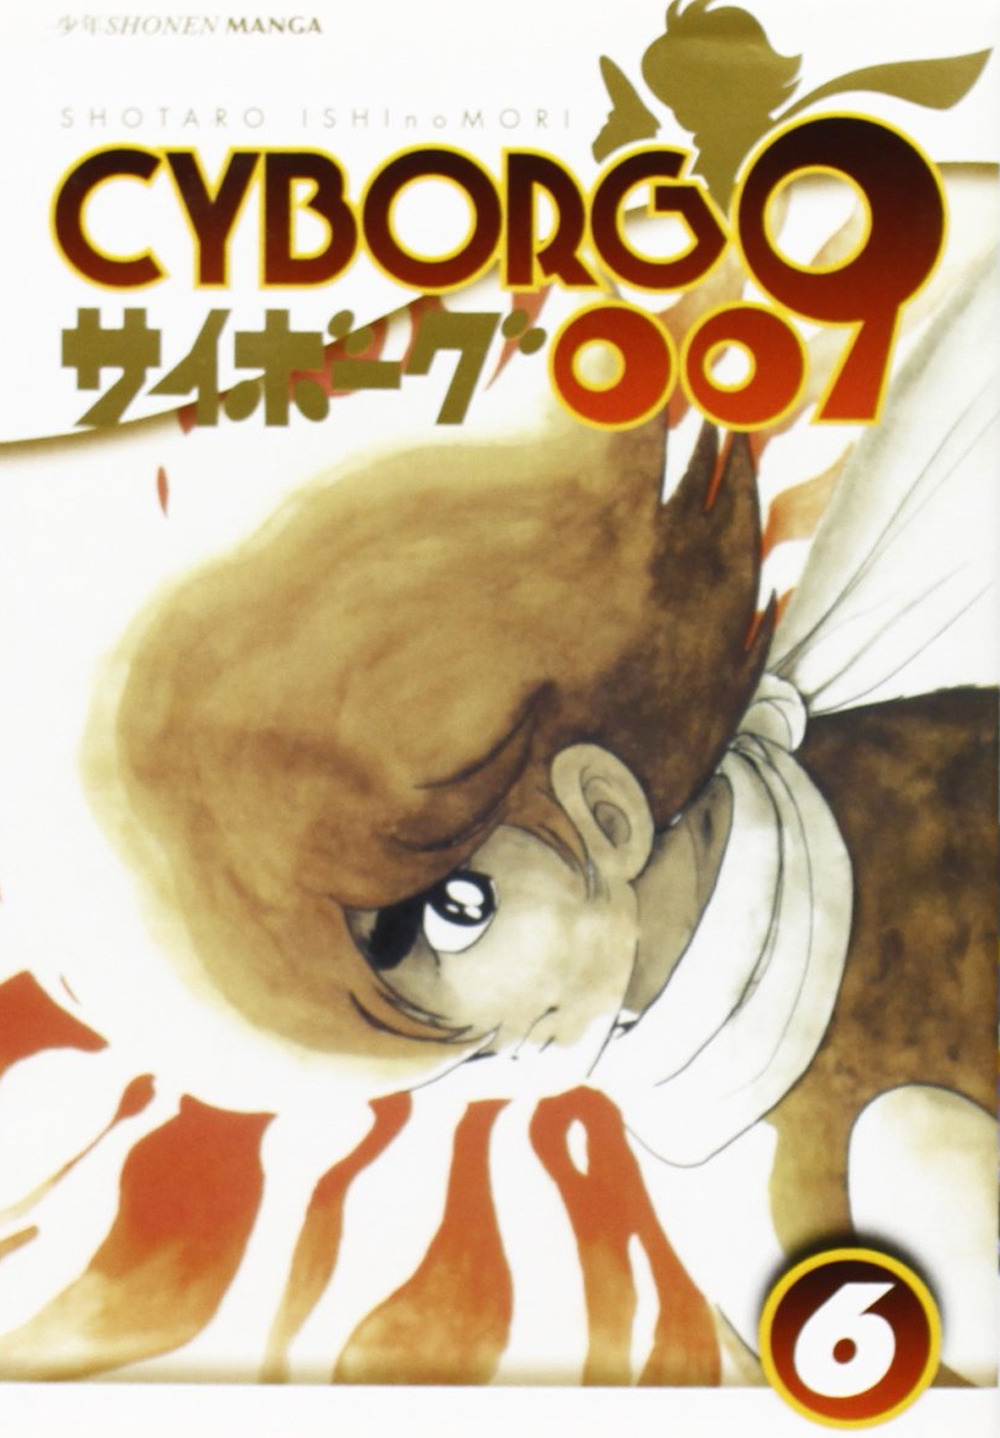 Cyborg 009. Vol. 6